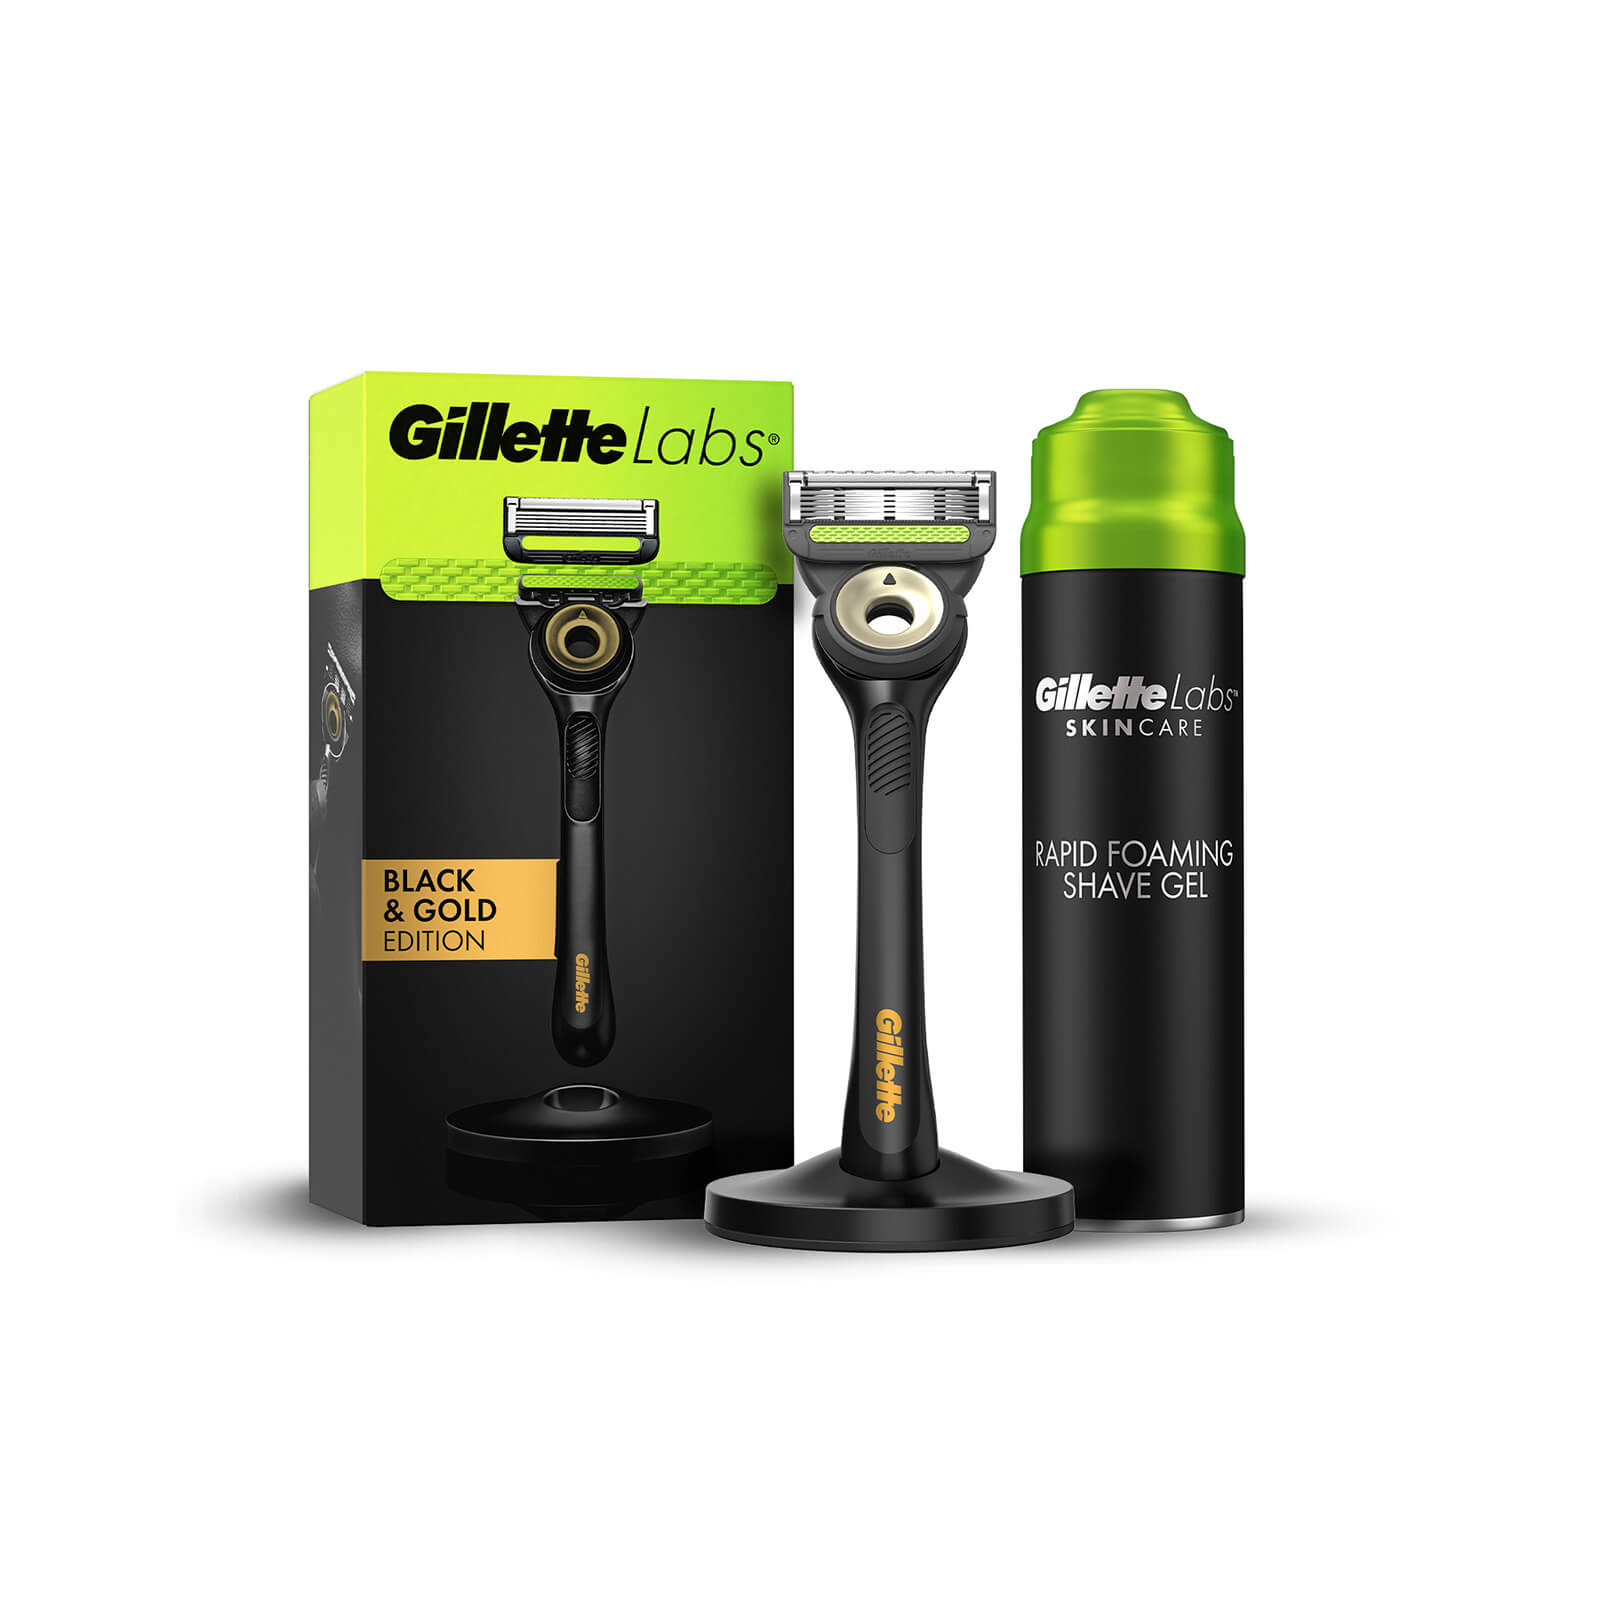 Gillette Labs Razor with Exfoliating Bar and Shaving Gel - Black & Gold Razor  Magnetic Stand  Shaving Gel